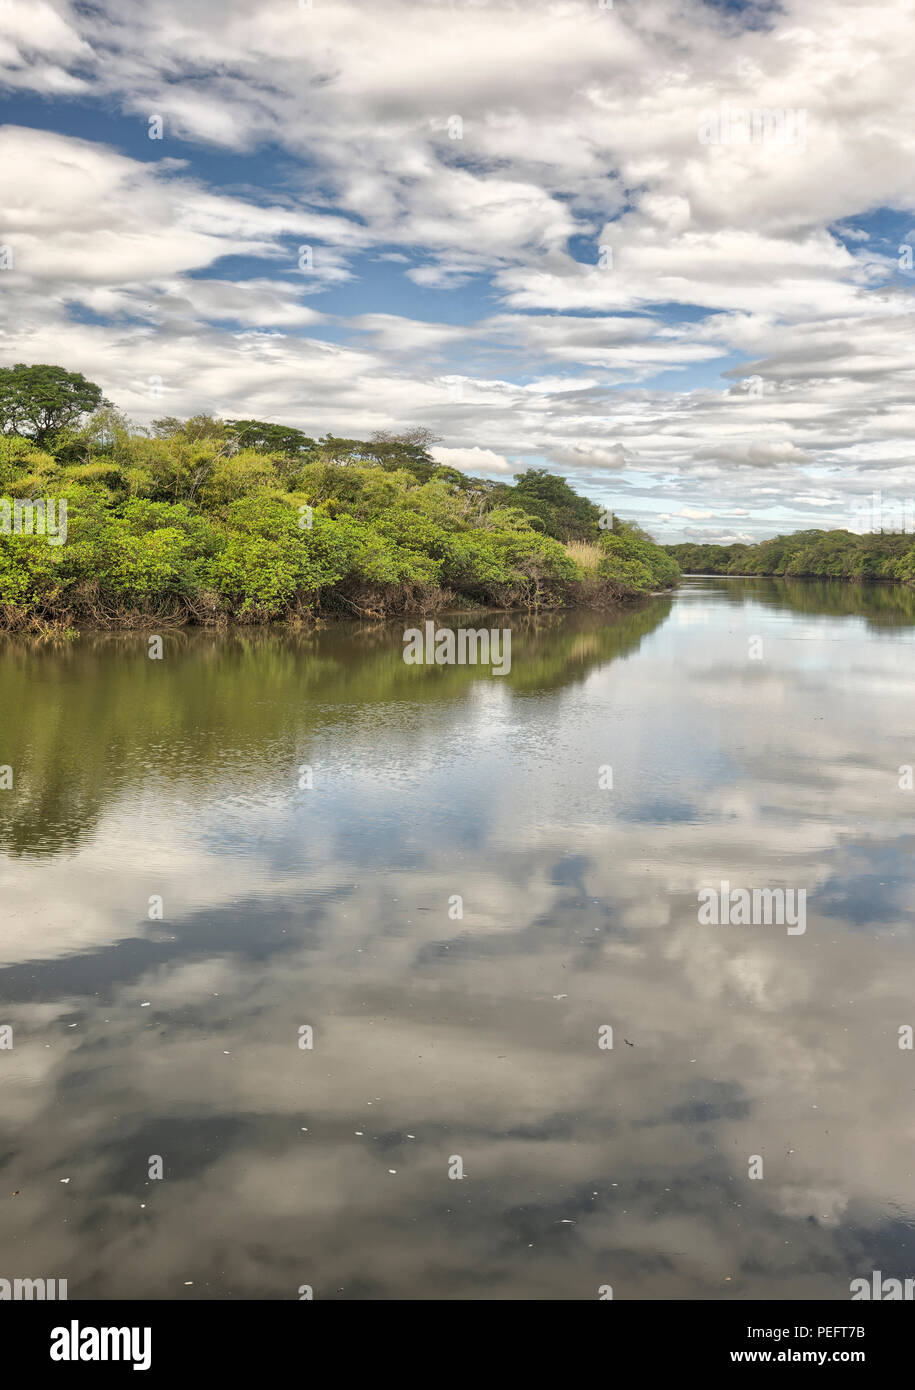 Tempisque River, Nationalpark Palo Verde, Costa Rica Stockfoto